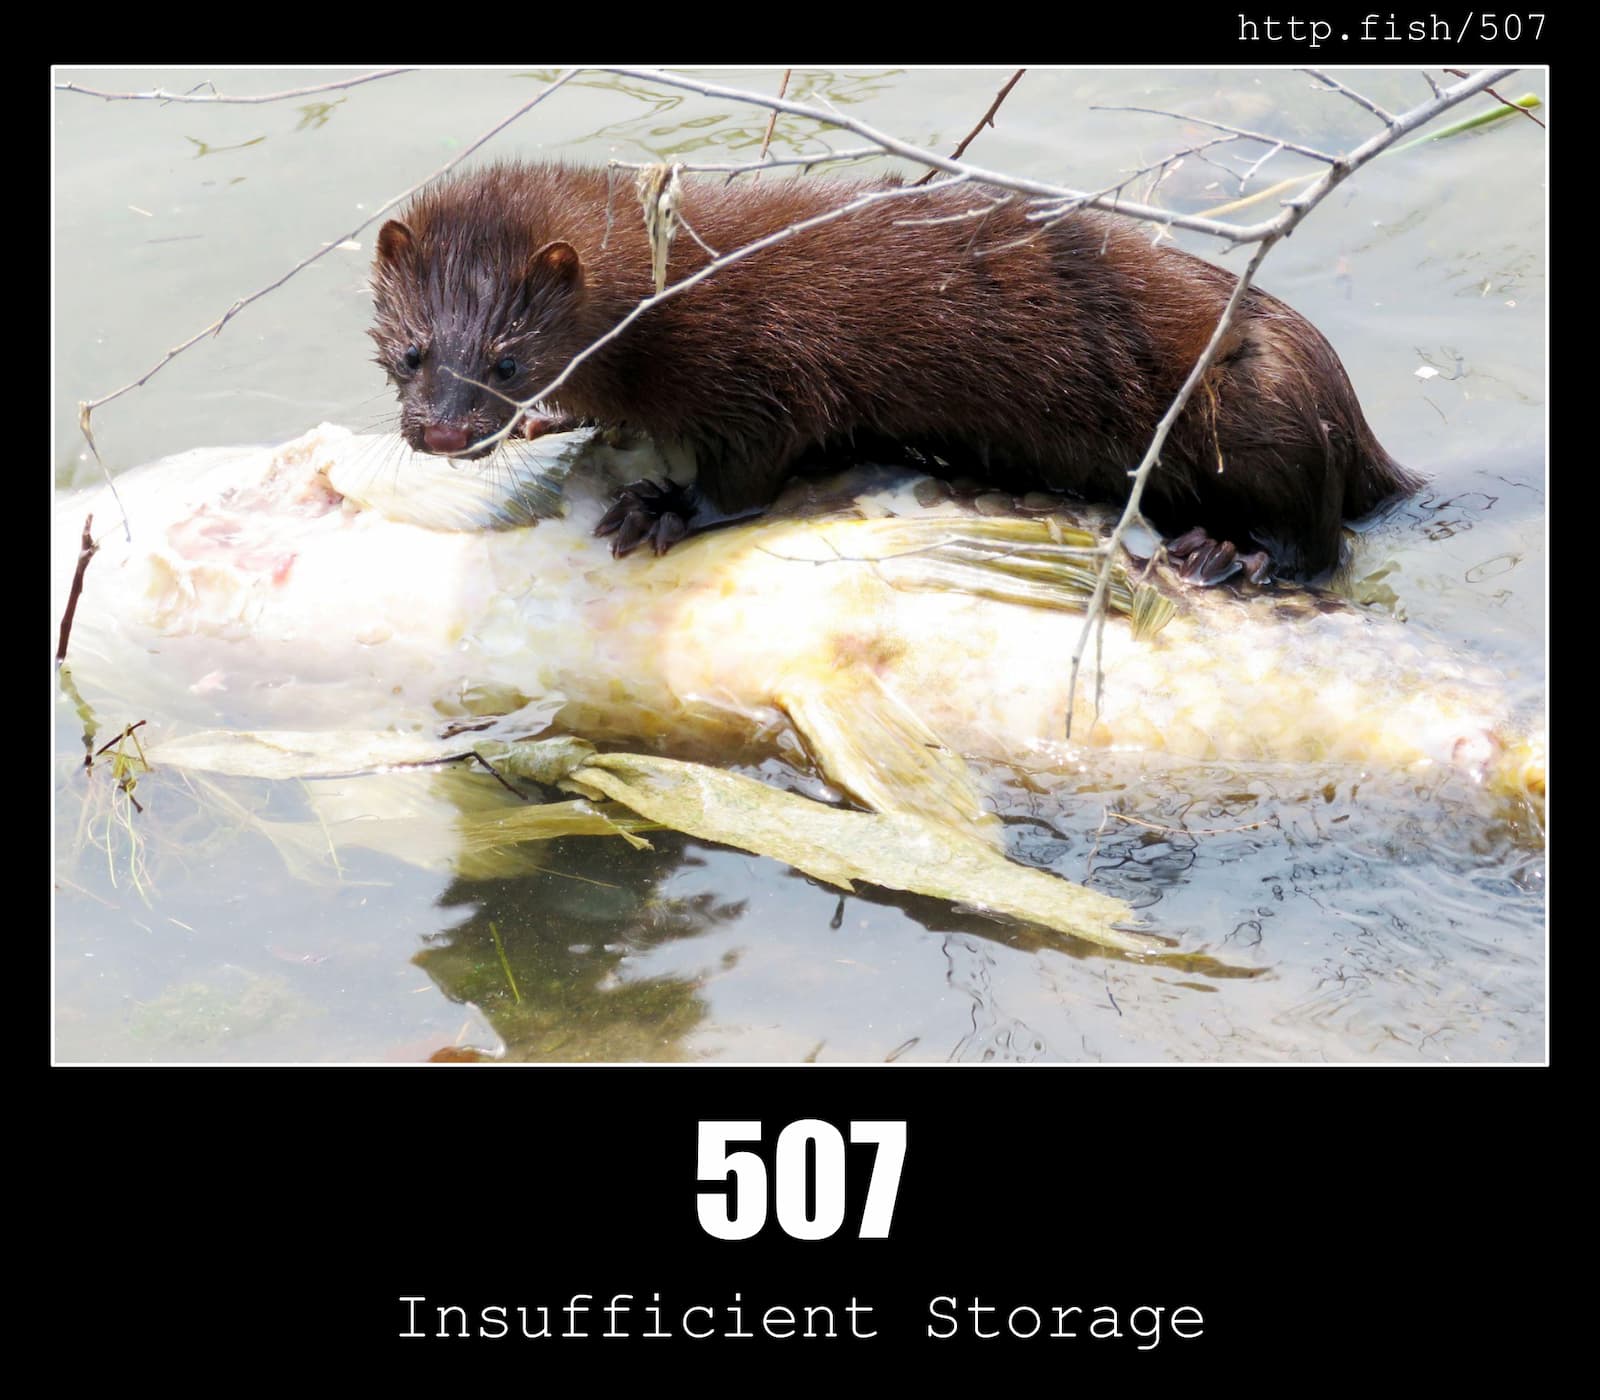 HTTP Status Code 507 Insufficient Storage & Fish